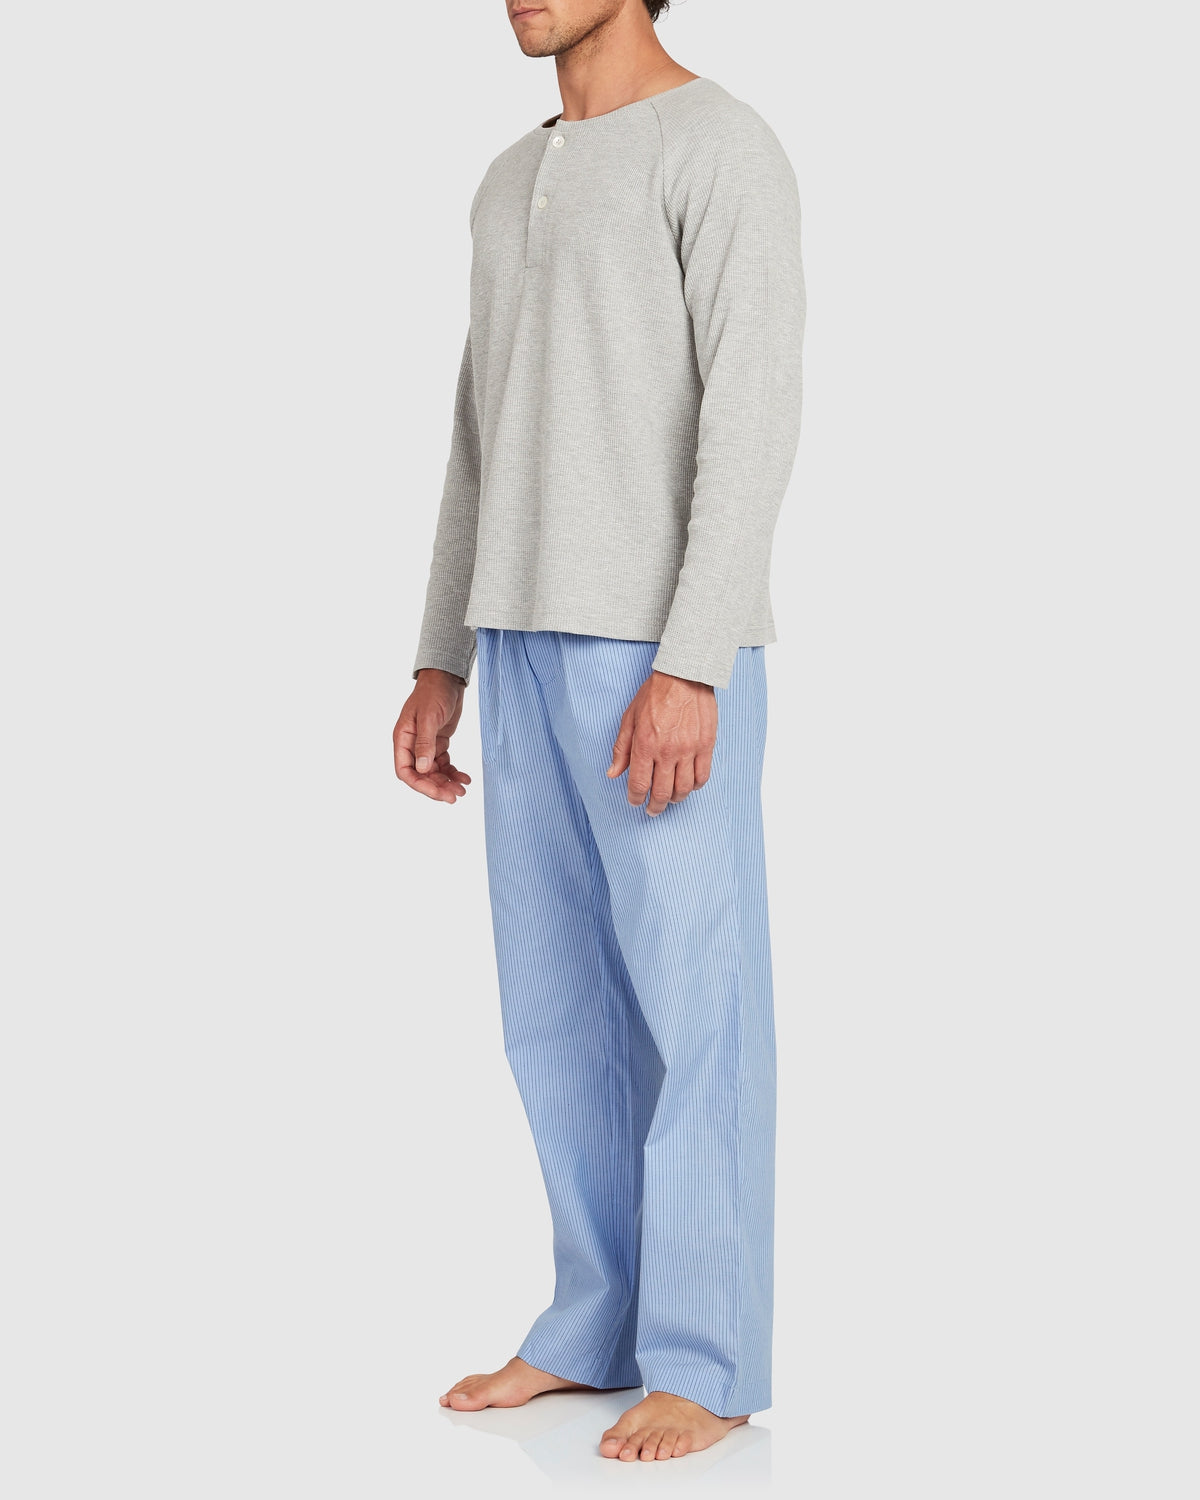 Load image into Gallery viewer, Unisex Cotton Man Pant - Placid Blue Black Stripe
